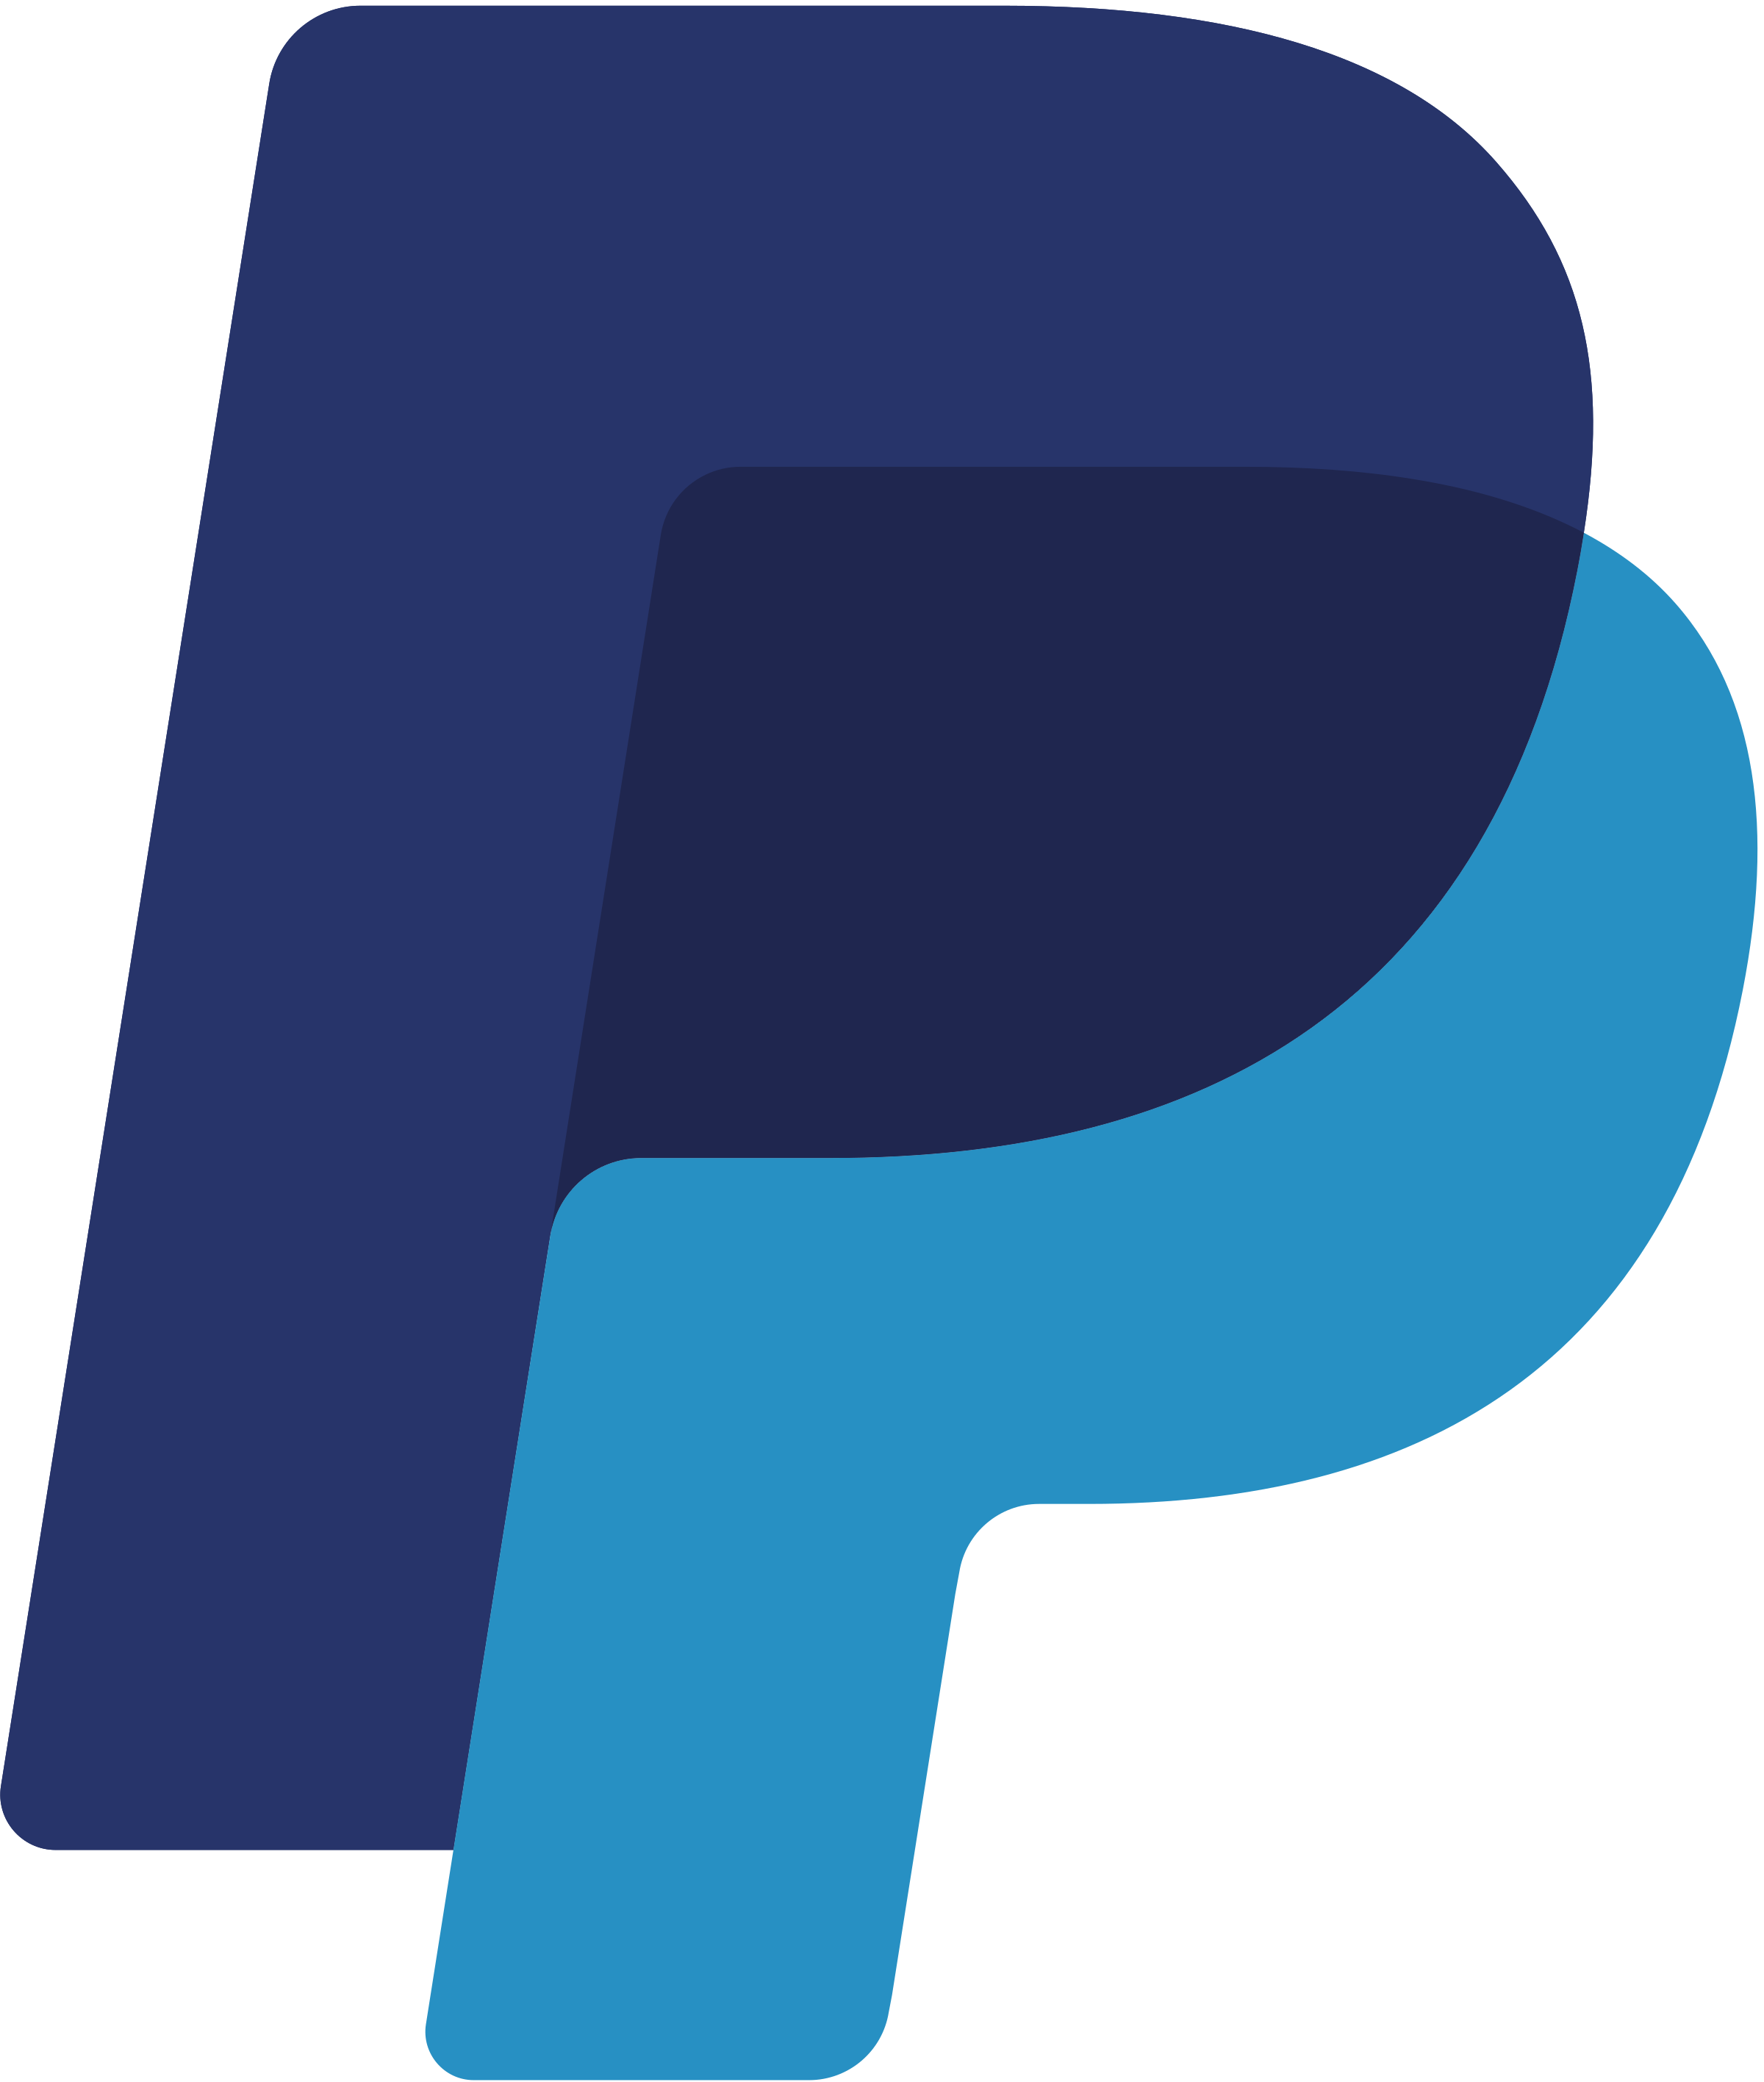 Paypal Logo PNG HD Quality